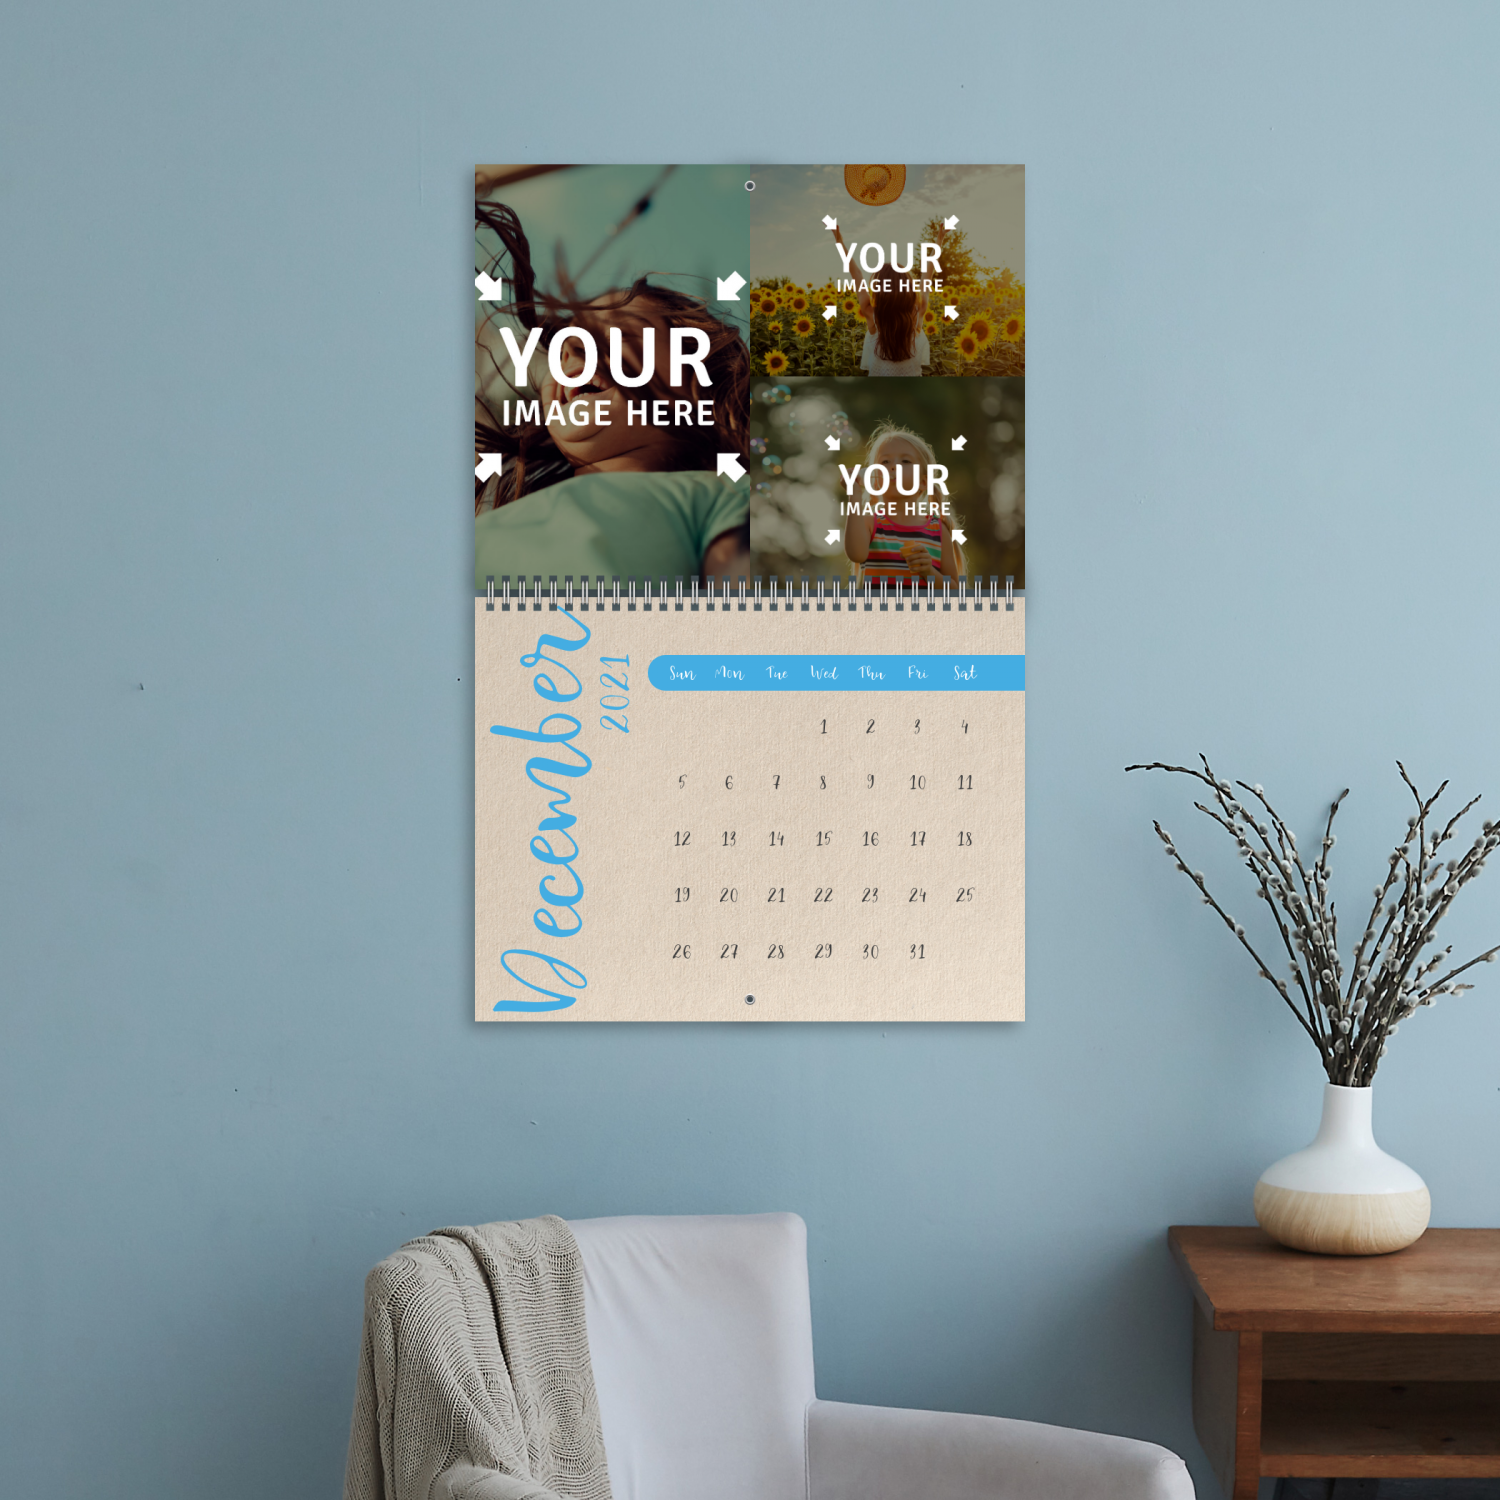 Custom Printed Wall Calendars With Company Logo - Bank2home.com